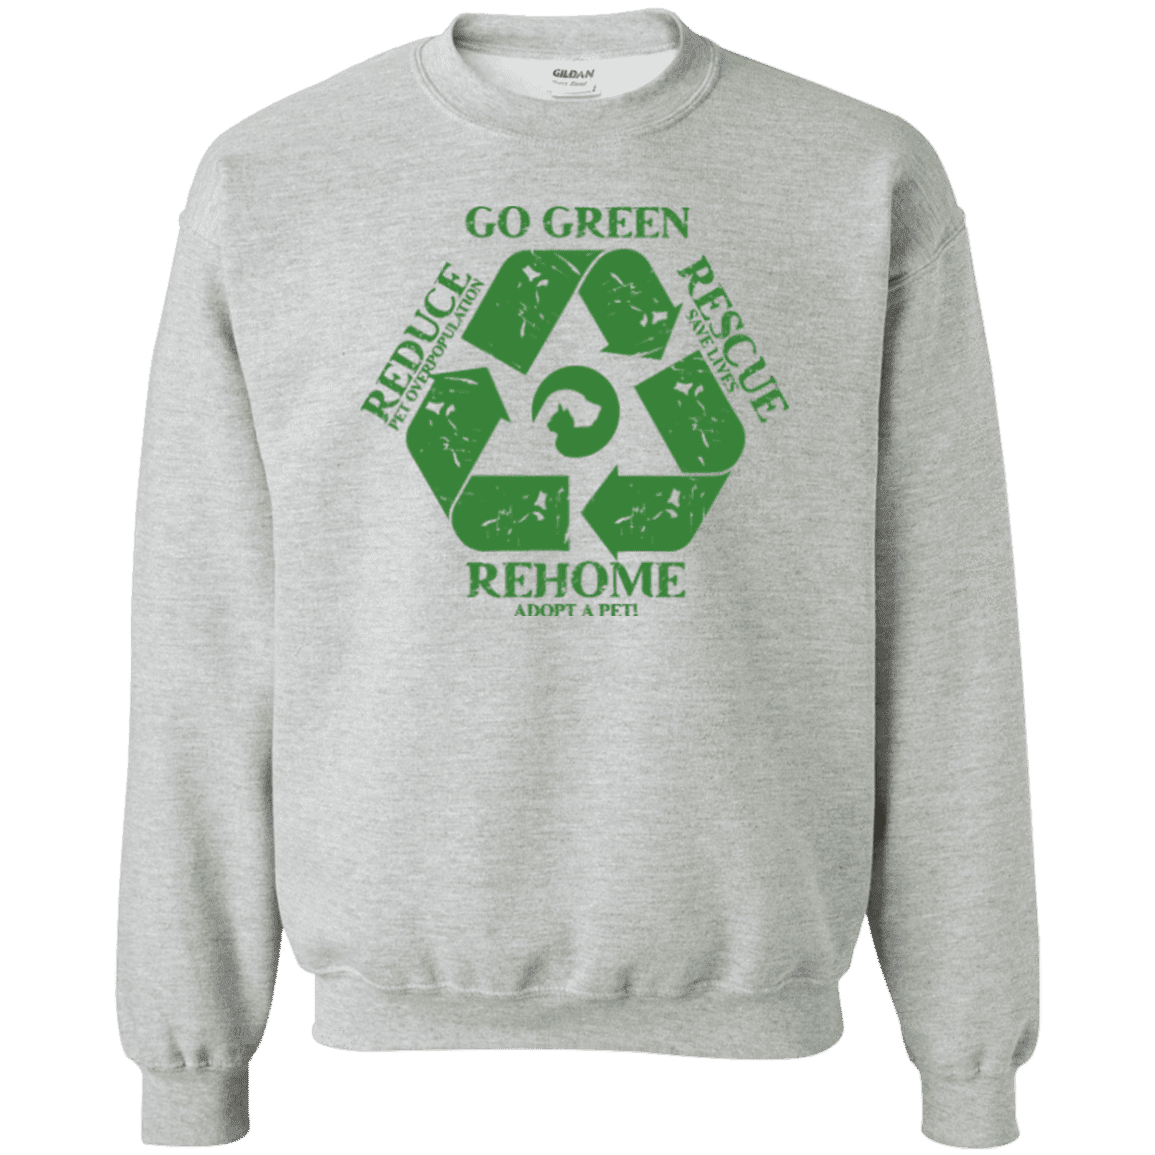 Go Green - Sweatshirt.